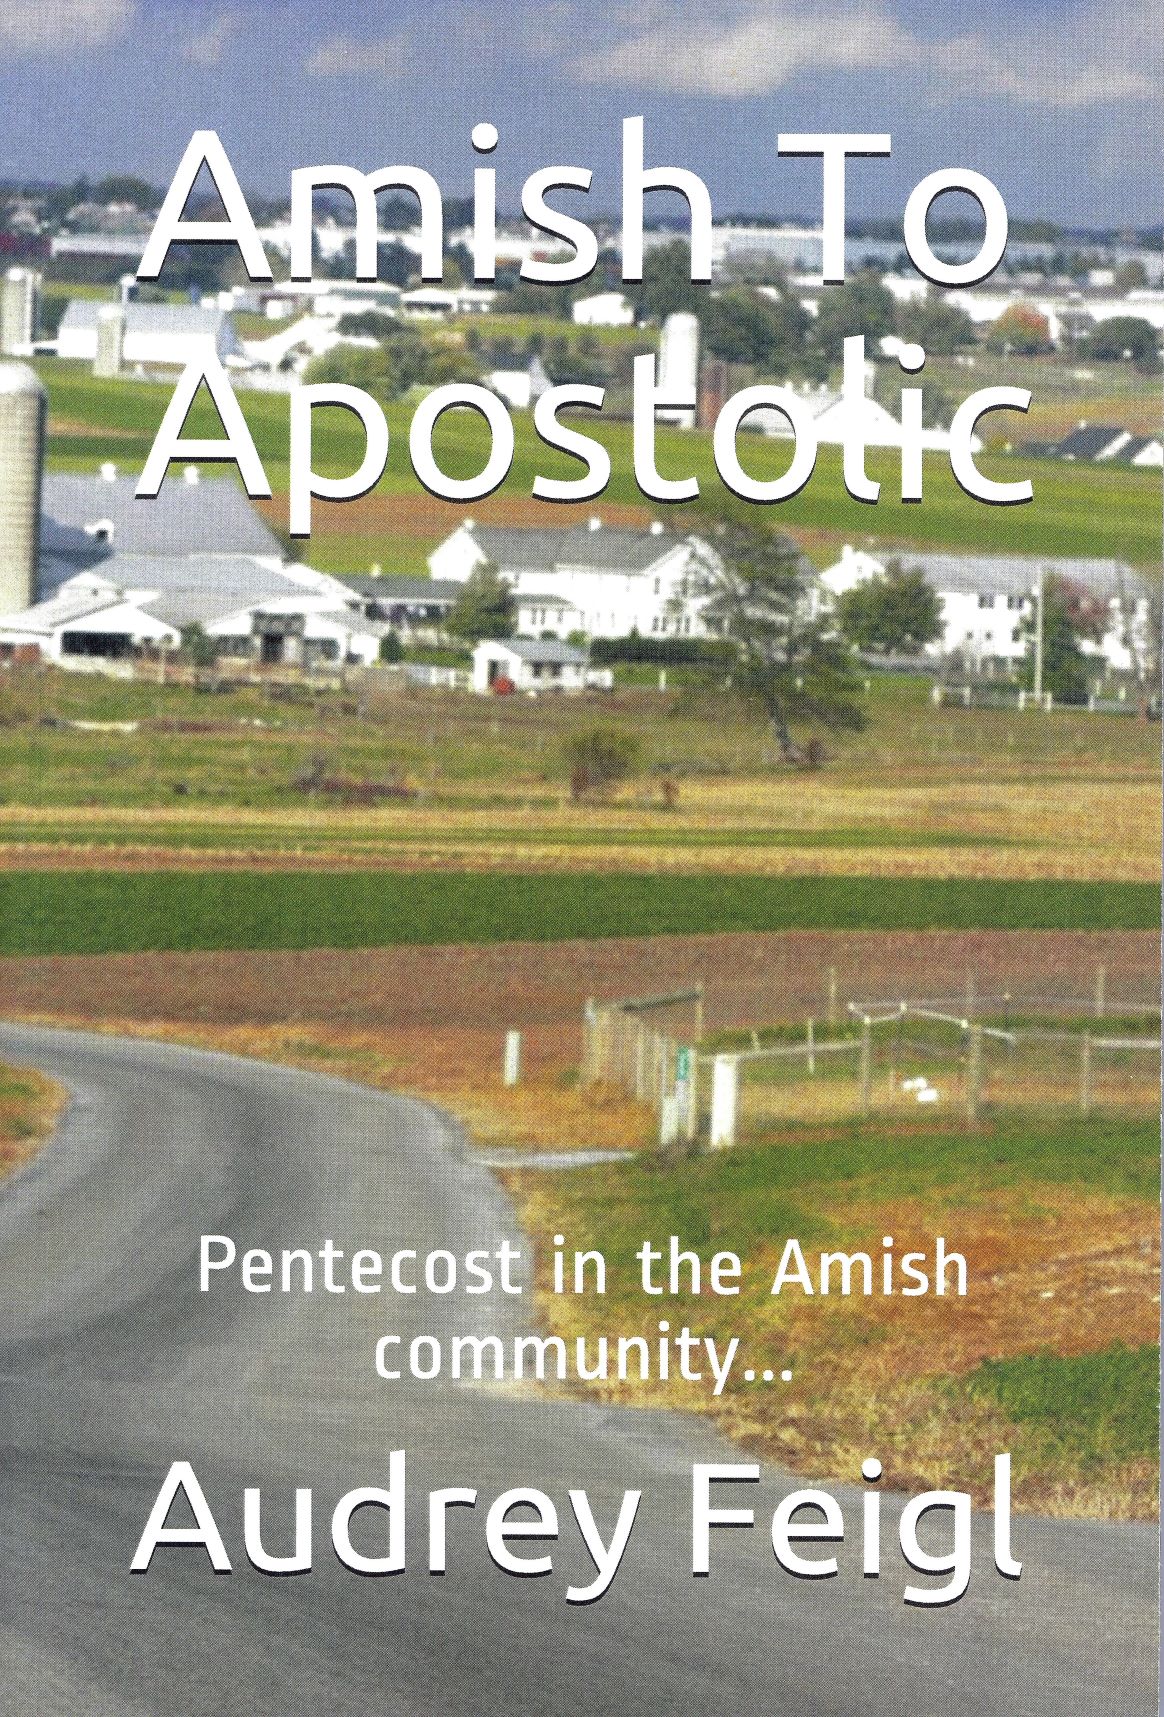 From Amish to Apostolic - Audrey Feigl